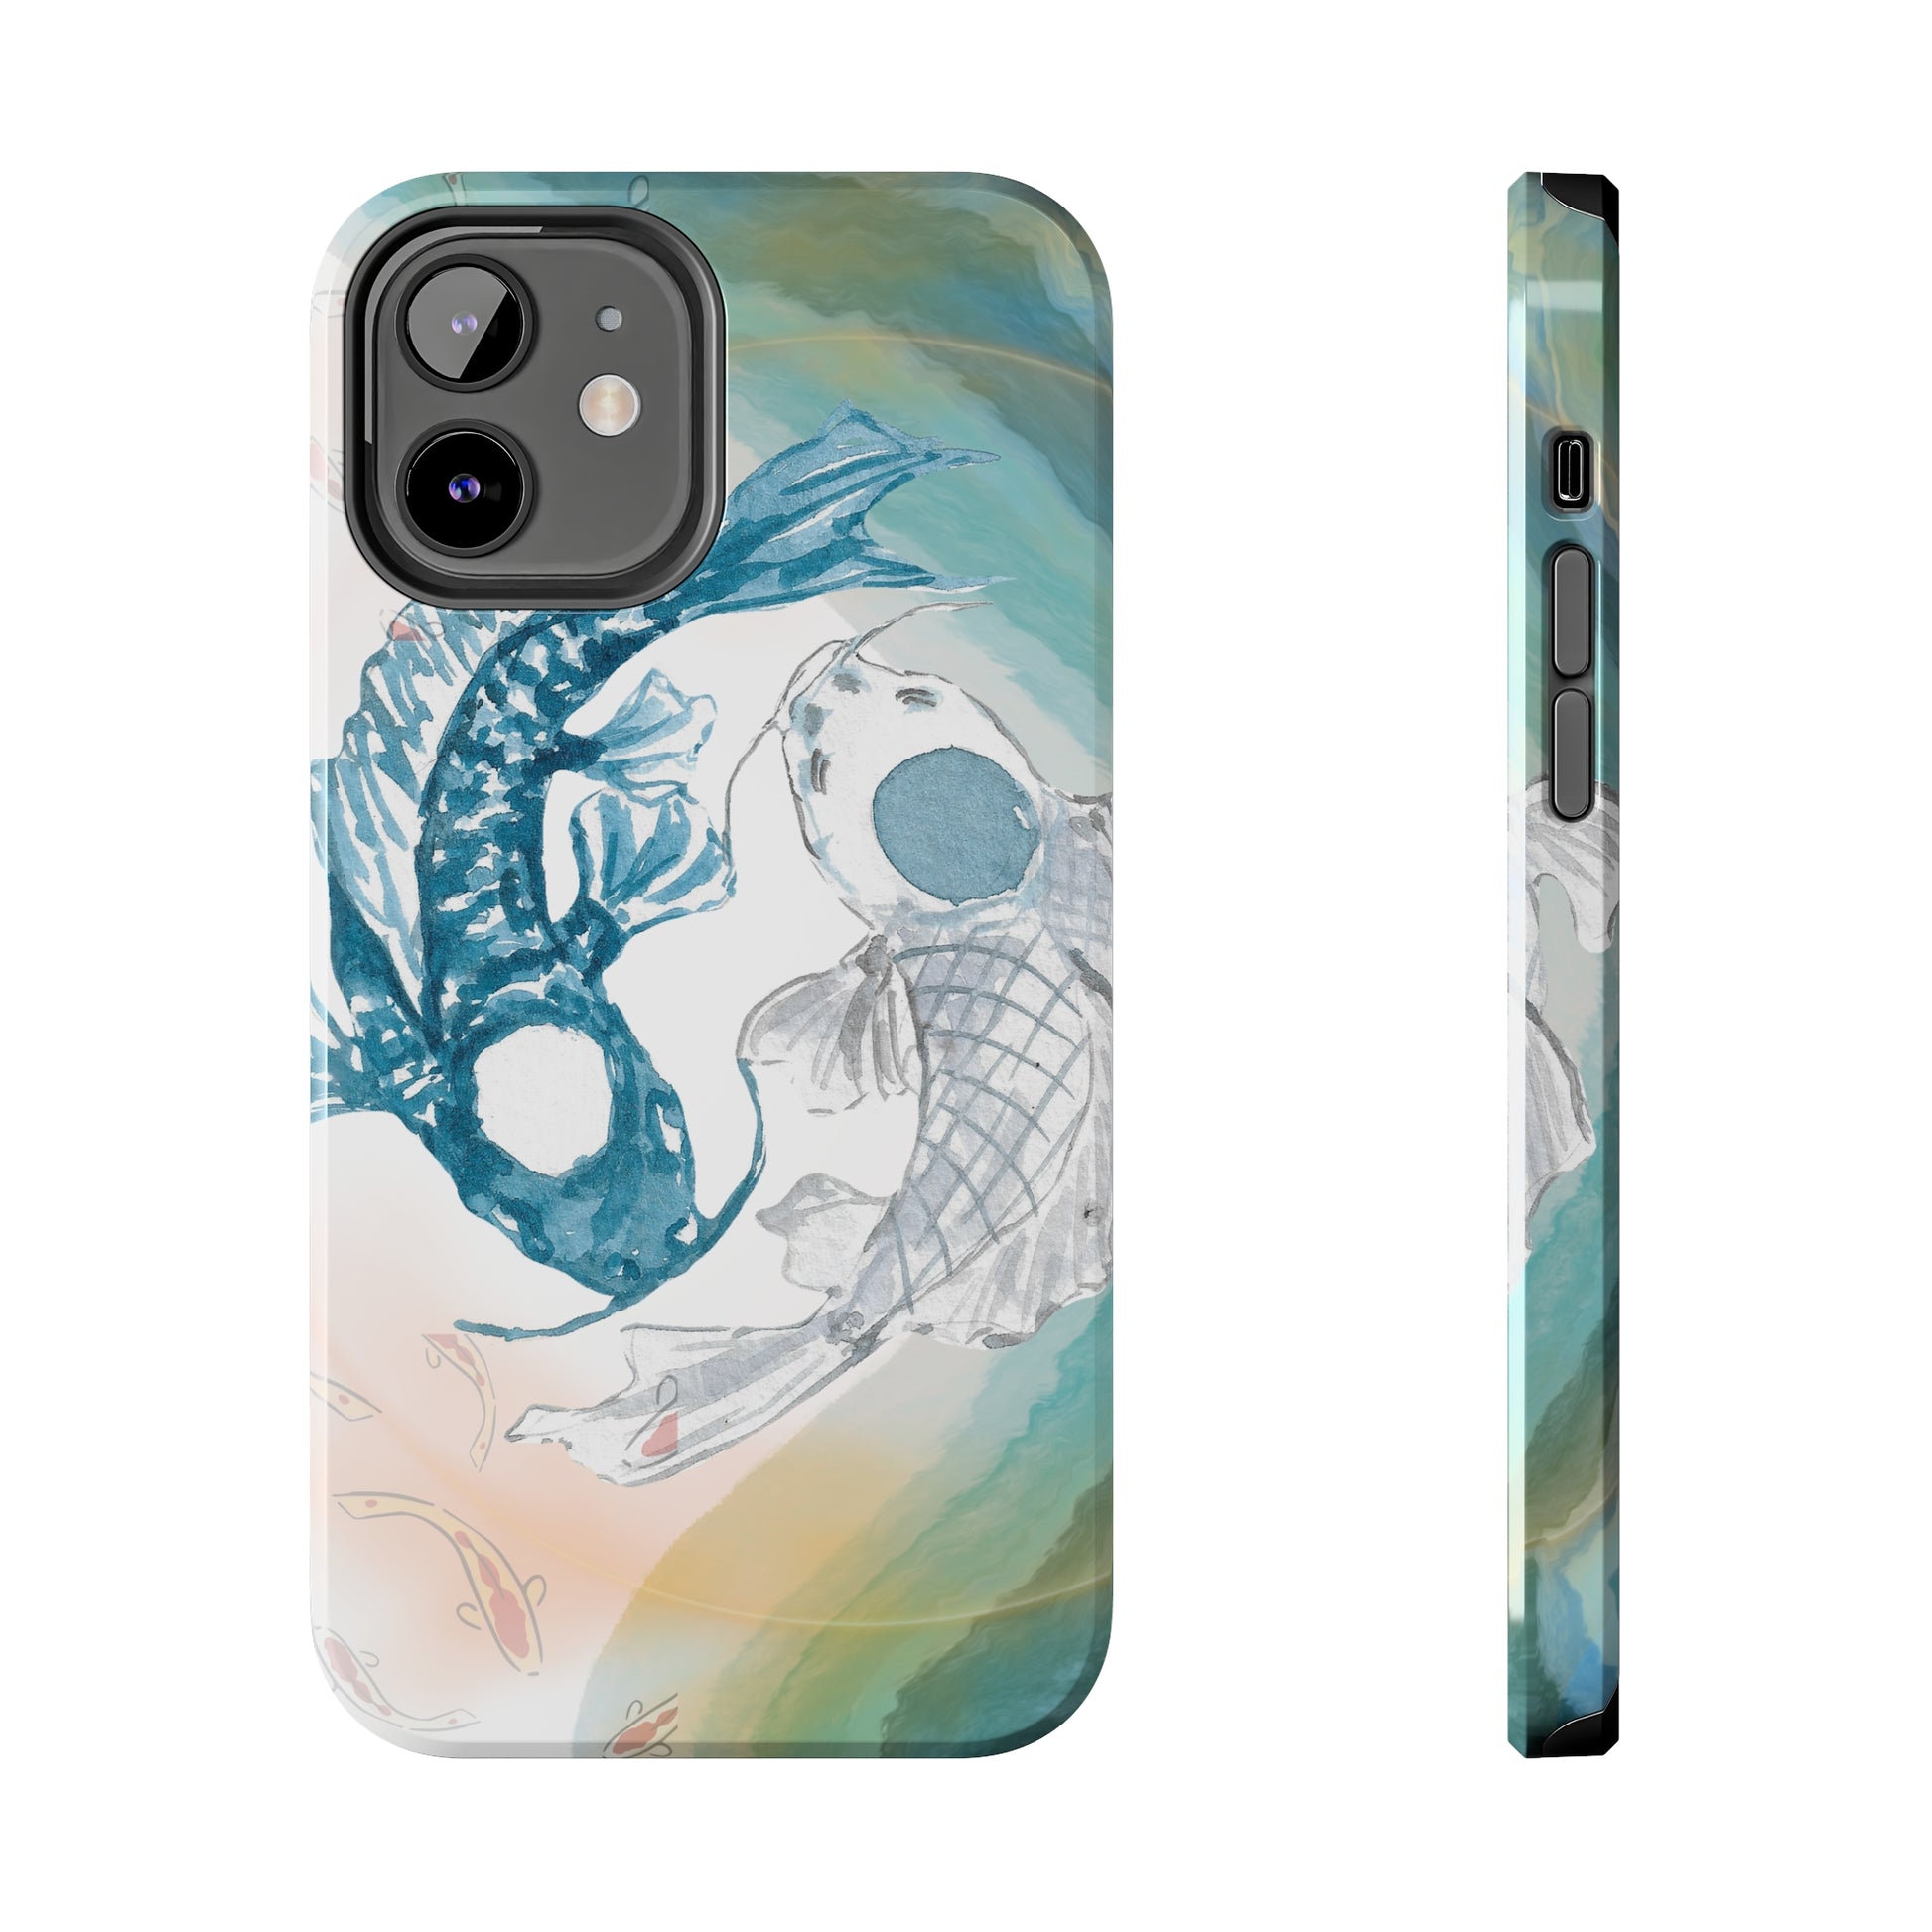 Koi Fish Custom Printed iPhone case by TheGlassyLass.com